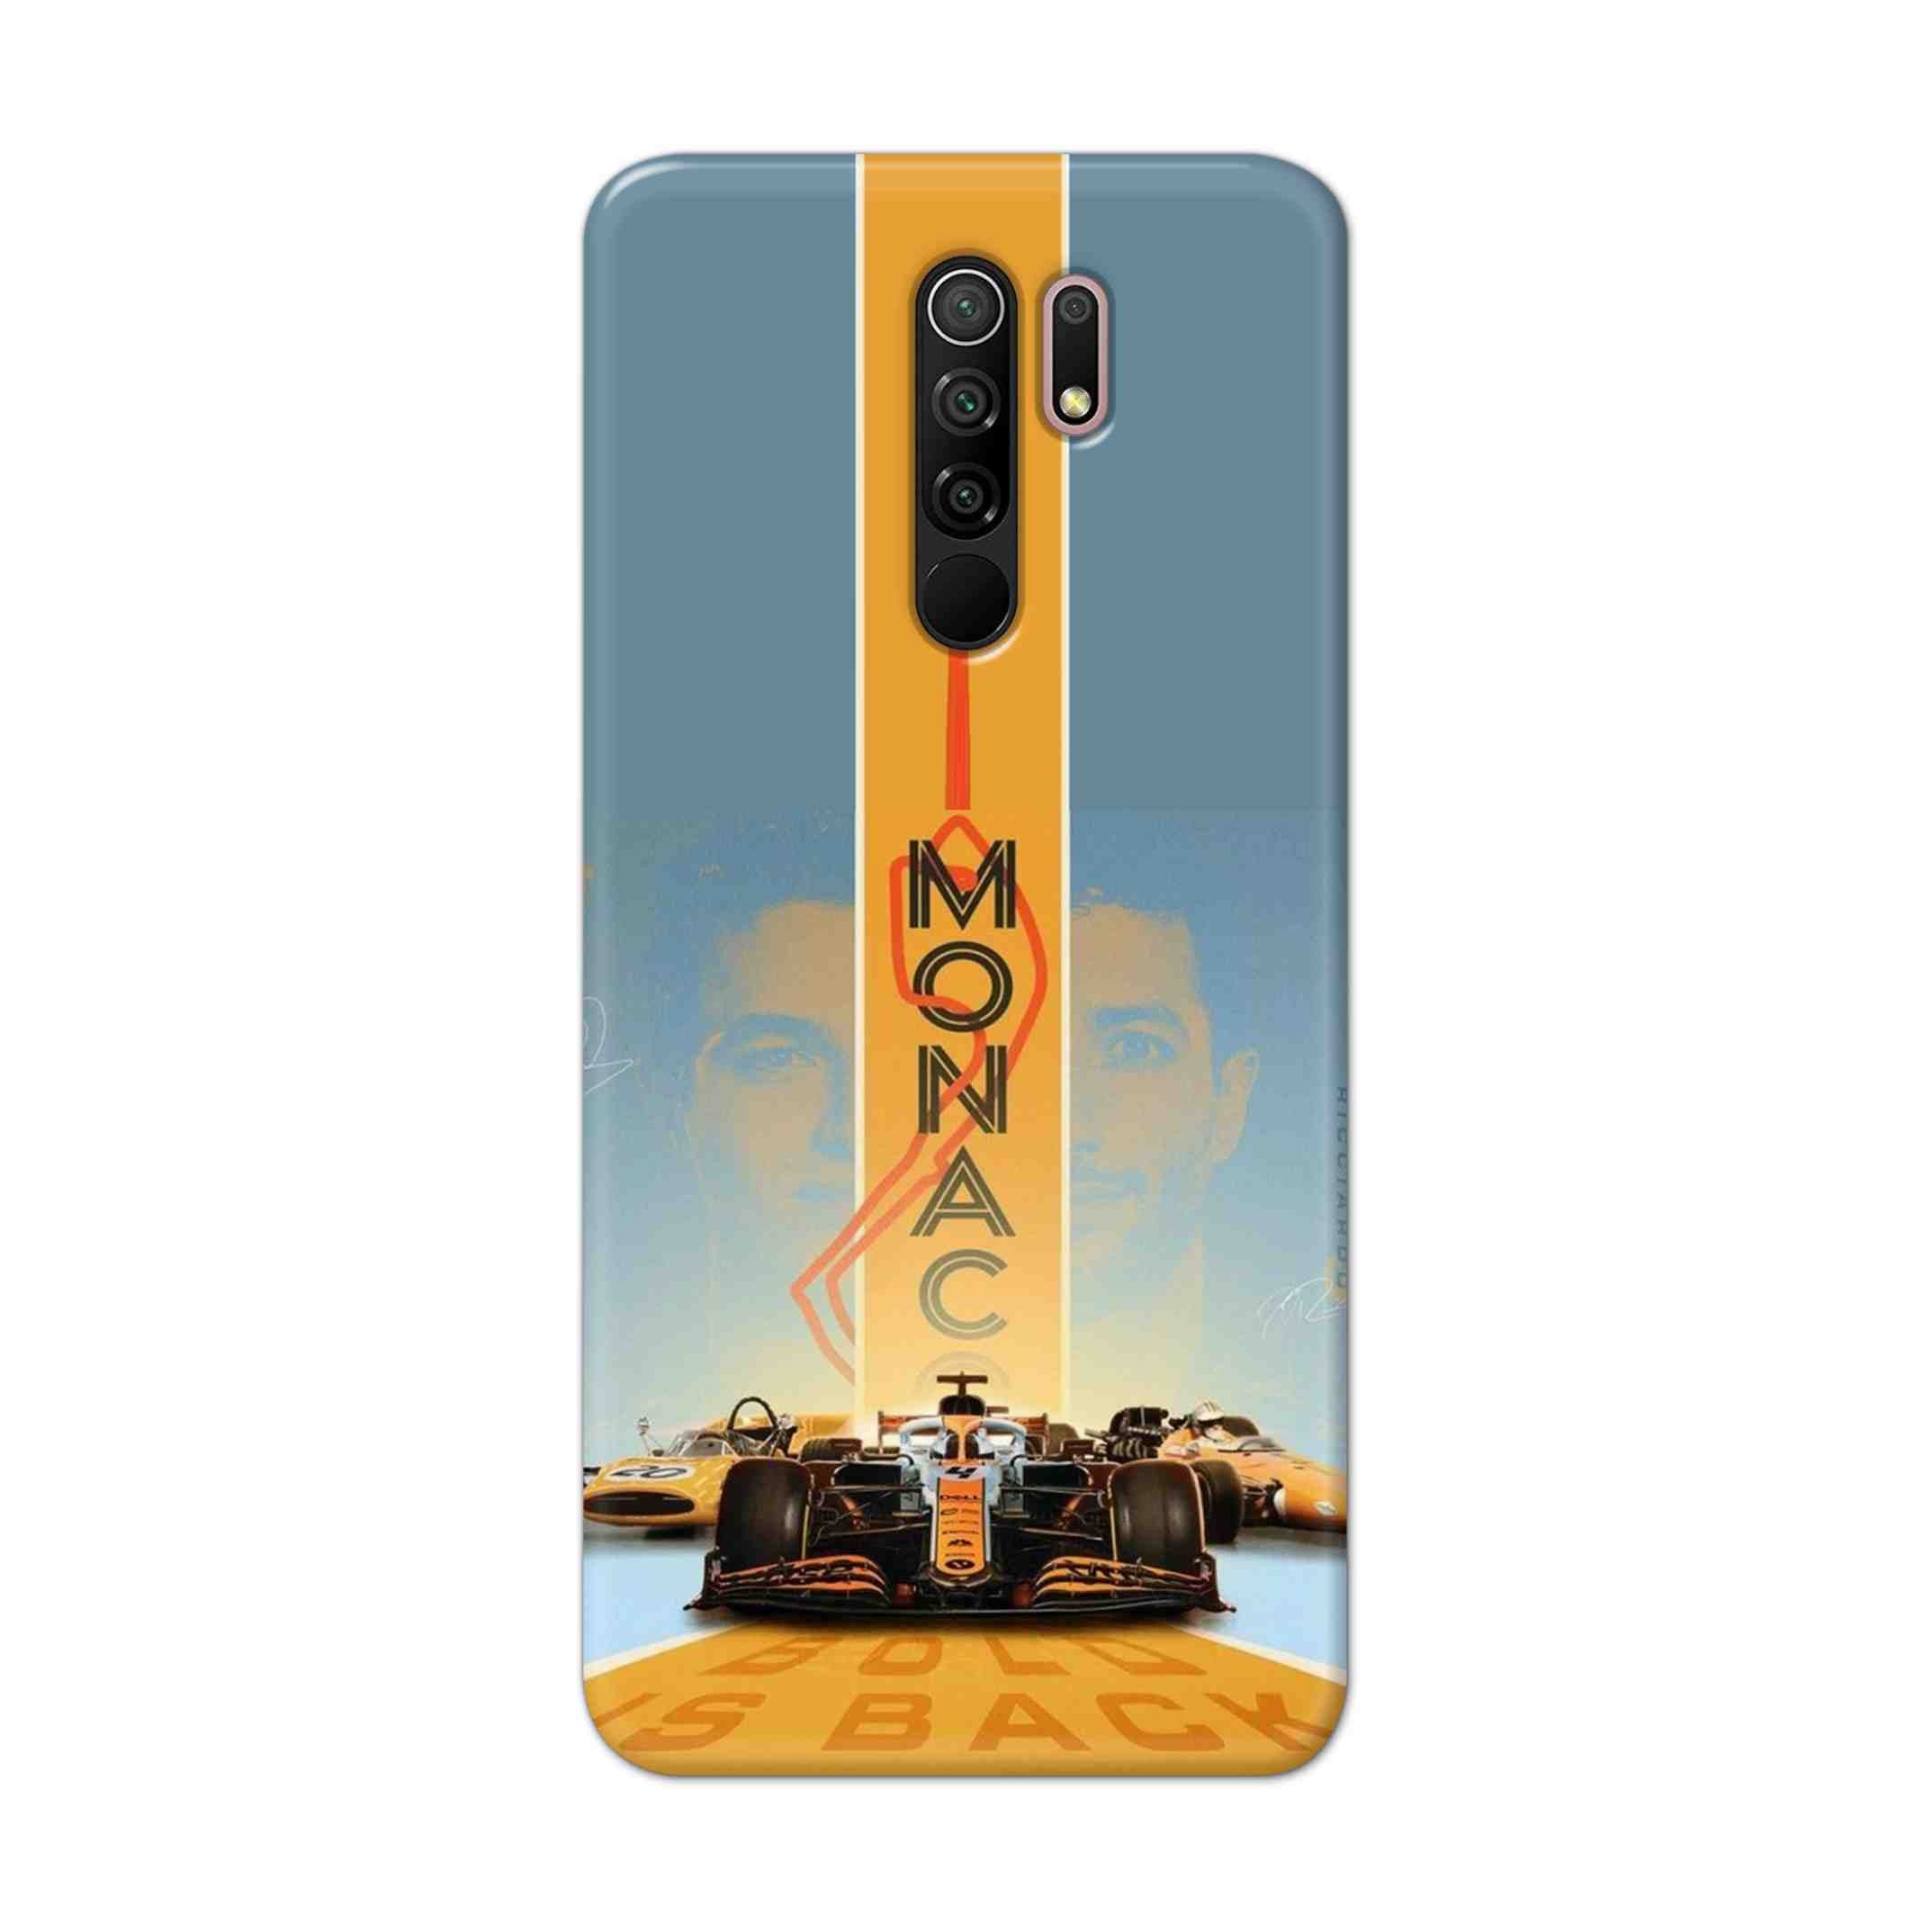 Buy Monac Formula Hard Back Mobile Phone Case Cover For Xiaomi Redmi 9 Prime Online